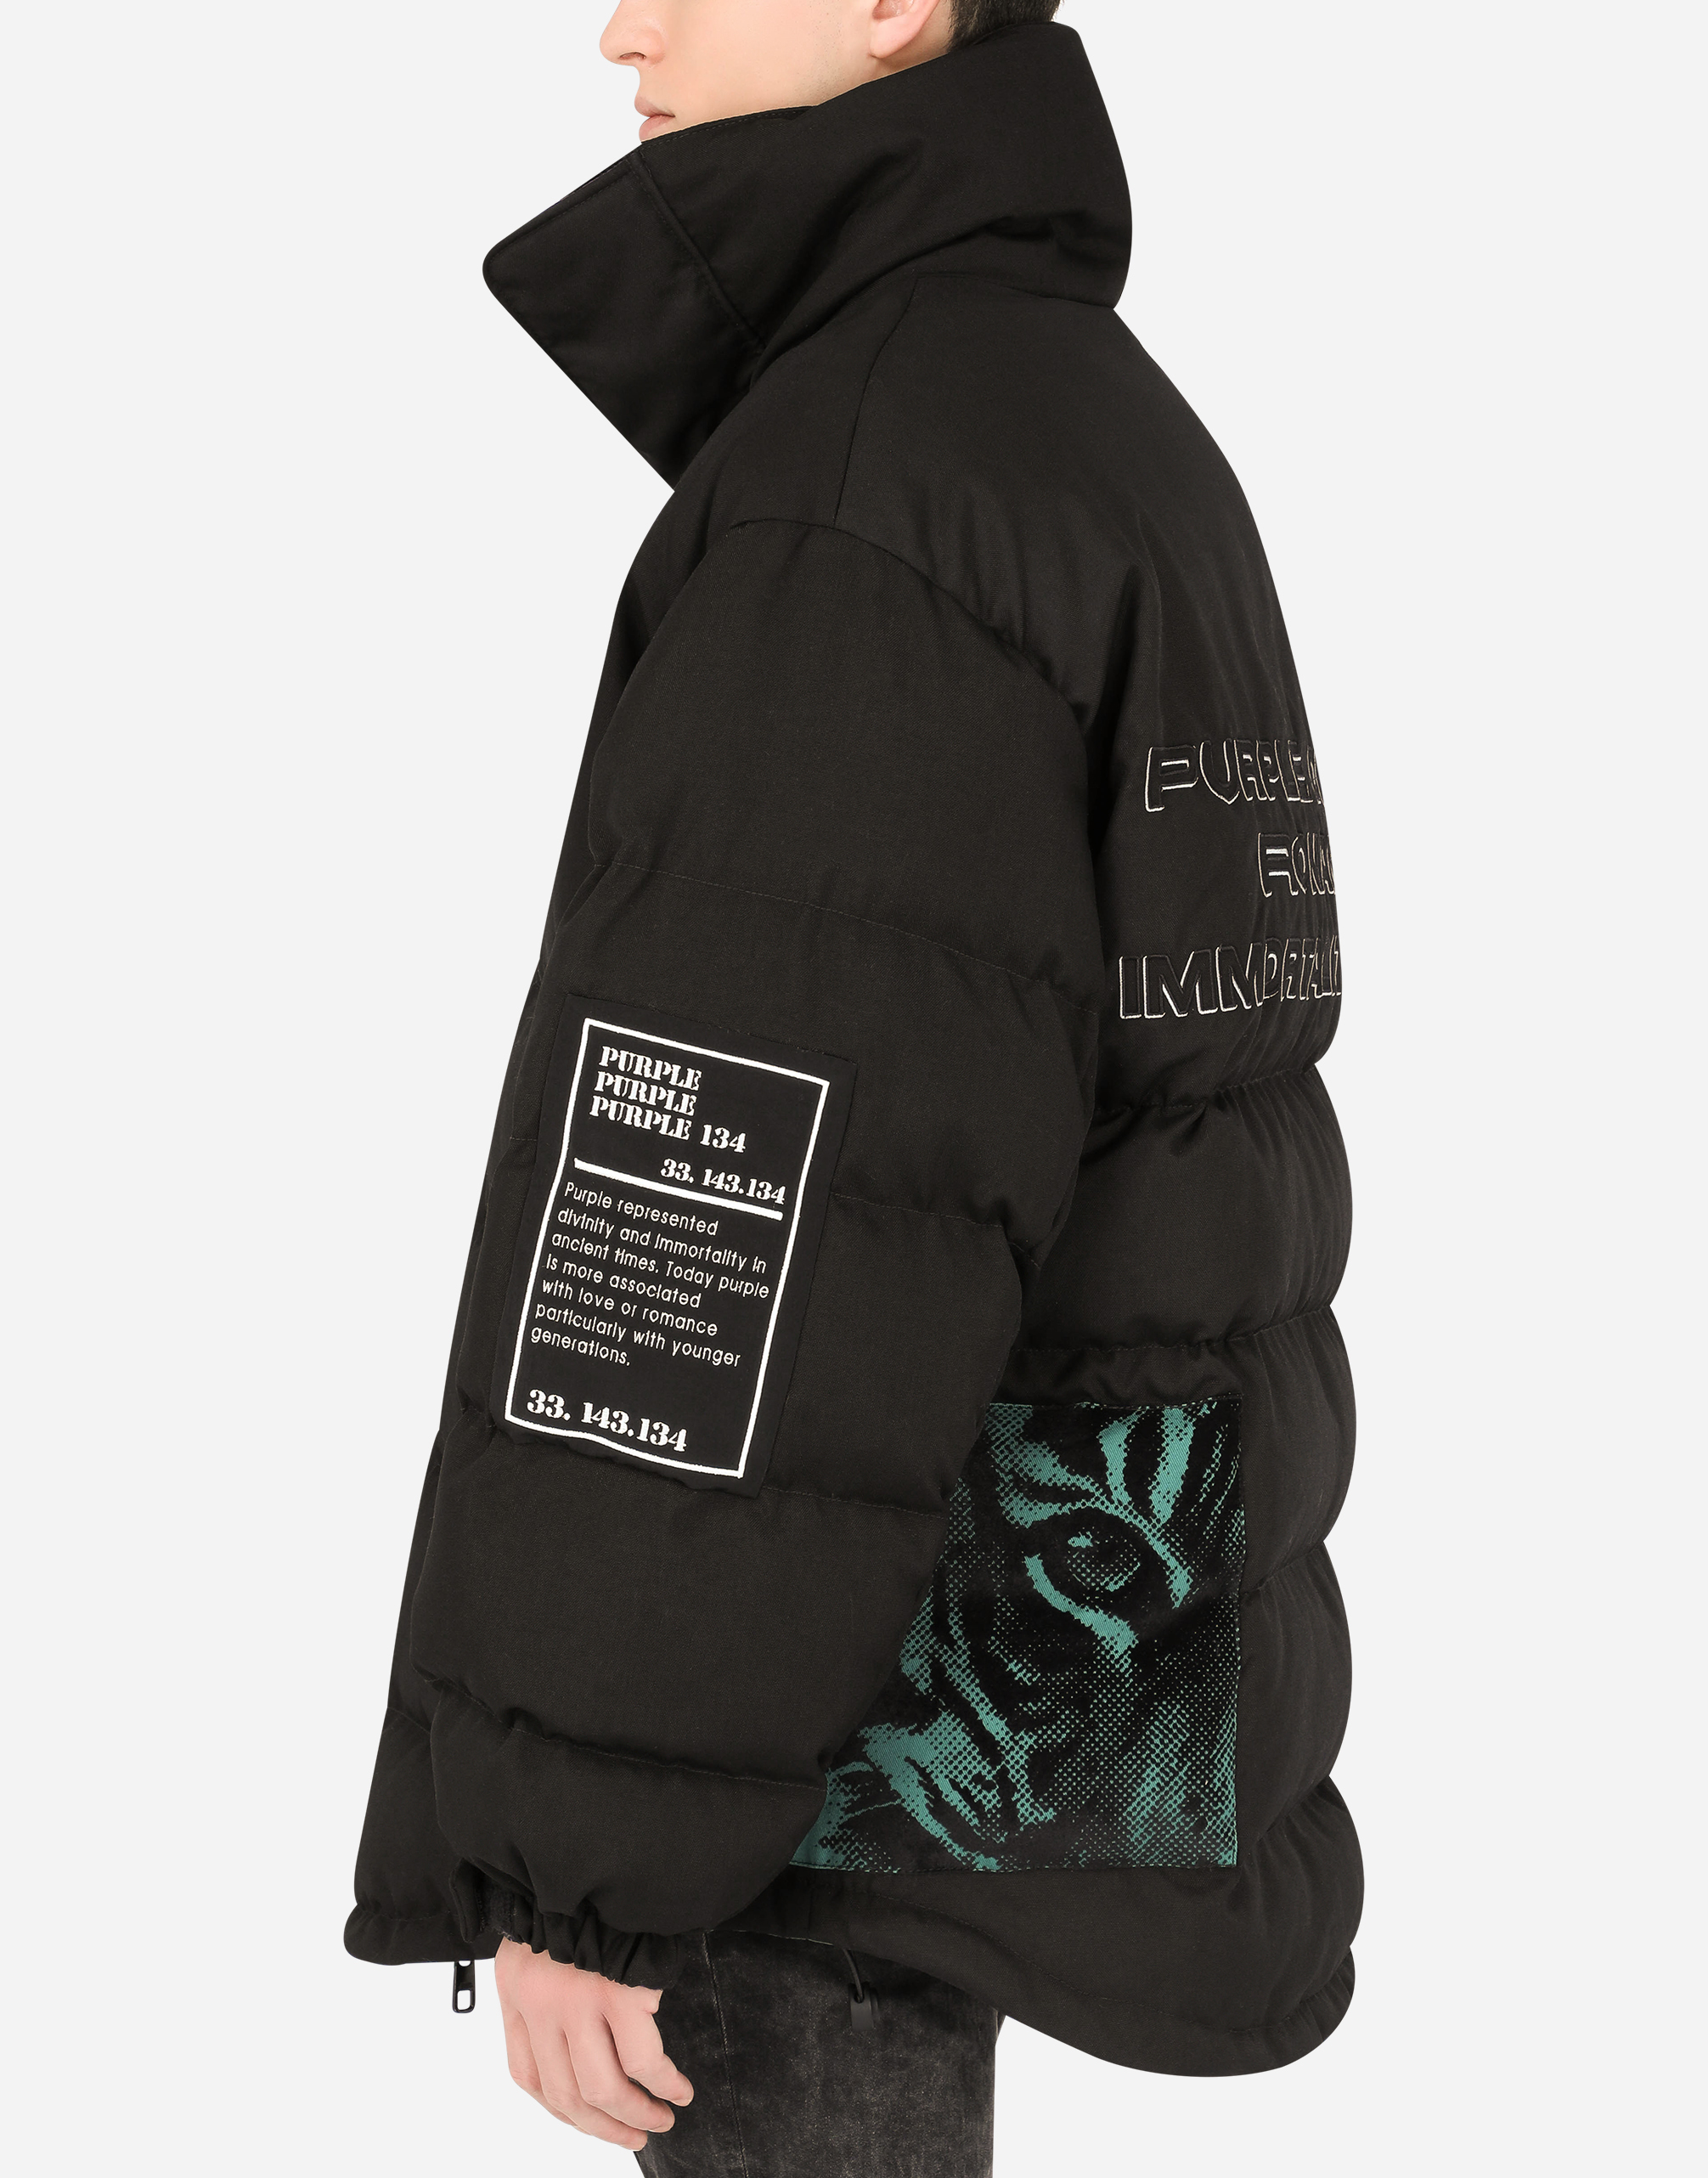 Cordura jacket with tiger print